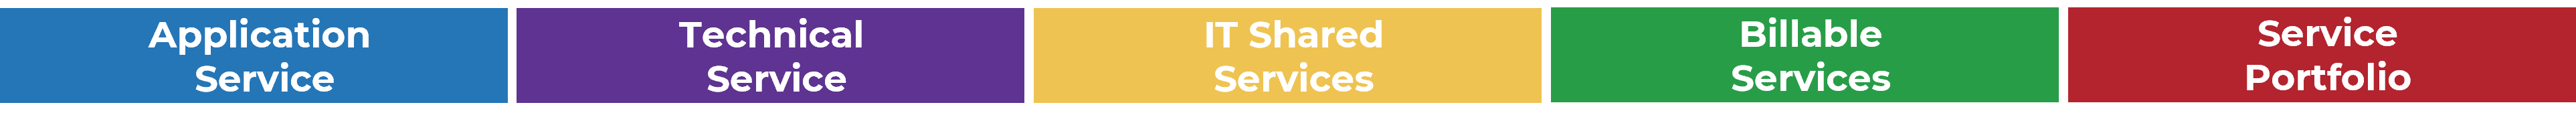 Application Service(blue); Technical Service(Purple); IT Shared Services(Orange); Billable Services(green); Service Portfolio(red)